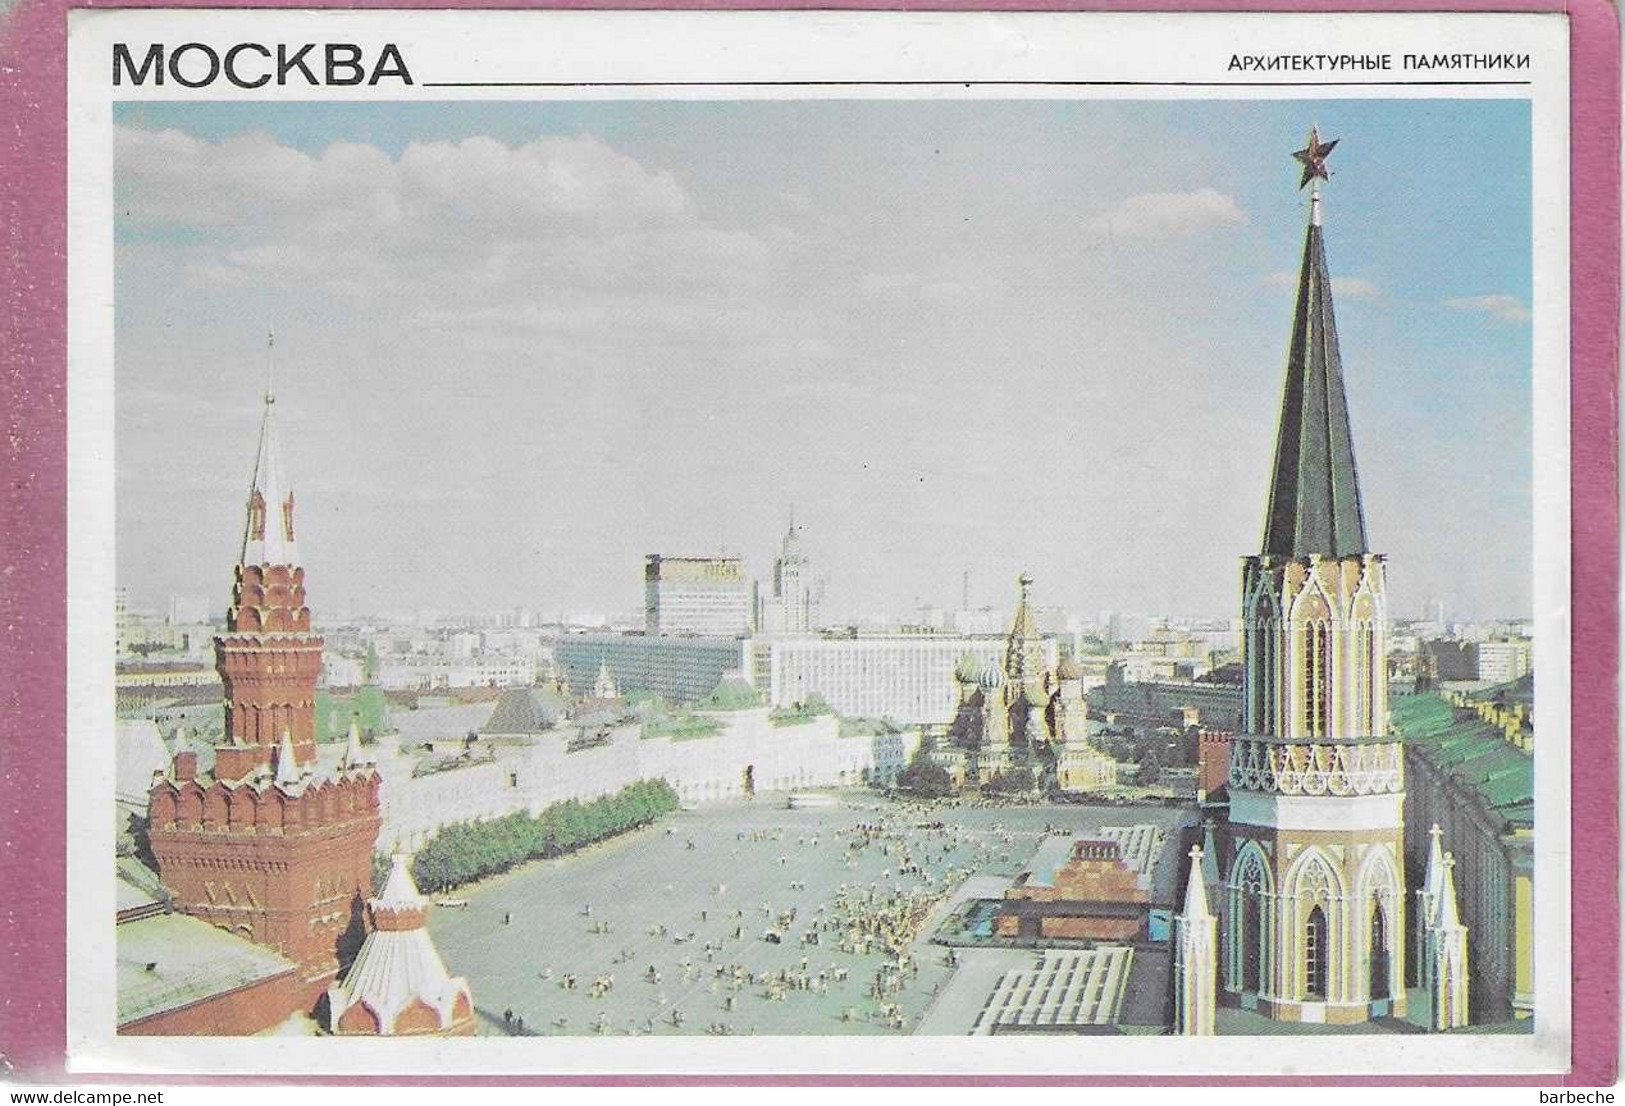 MOCKBA - Russia